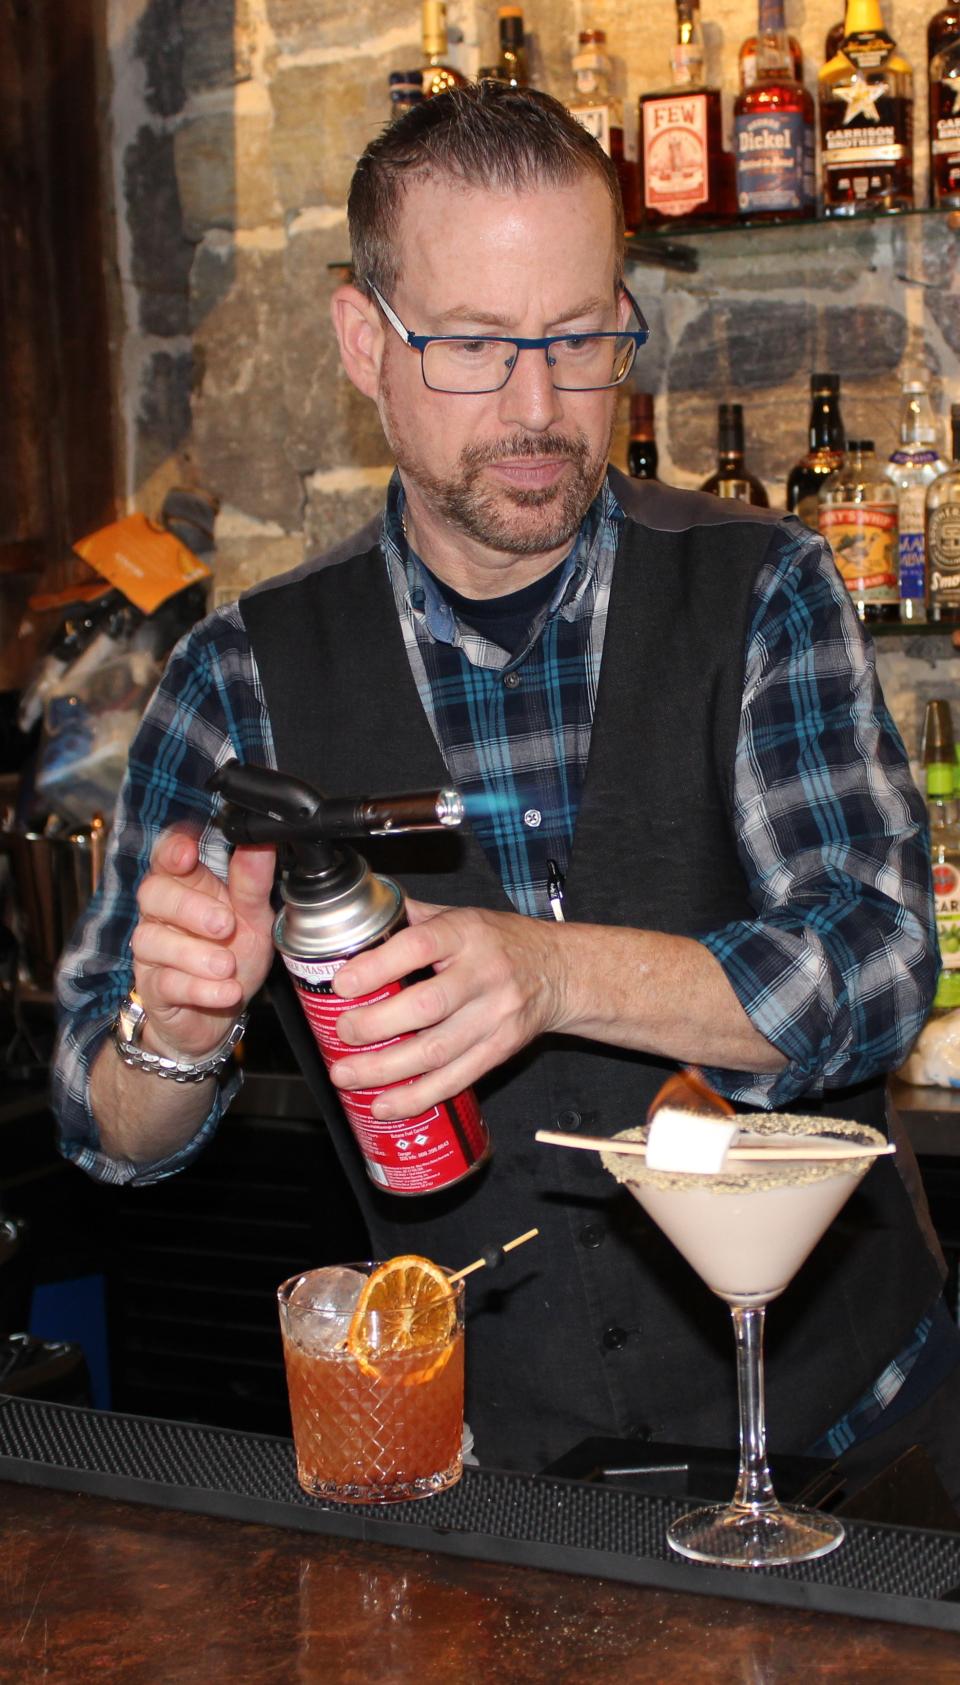 A bartender heats up a marshmallow on a cocktail